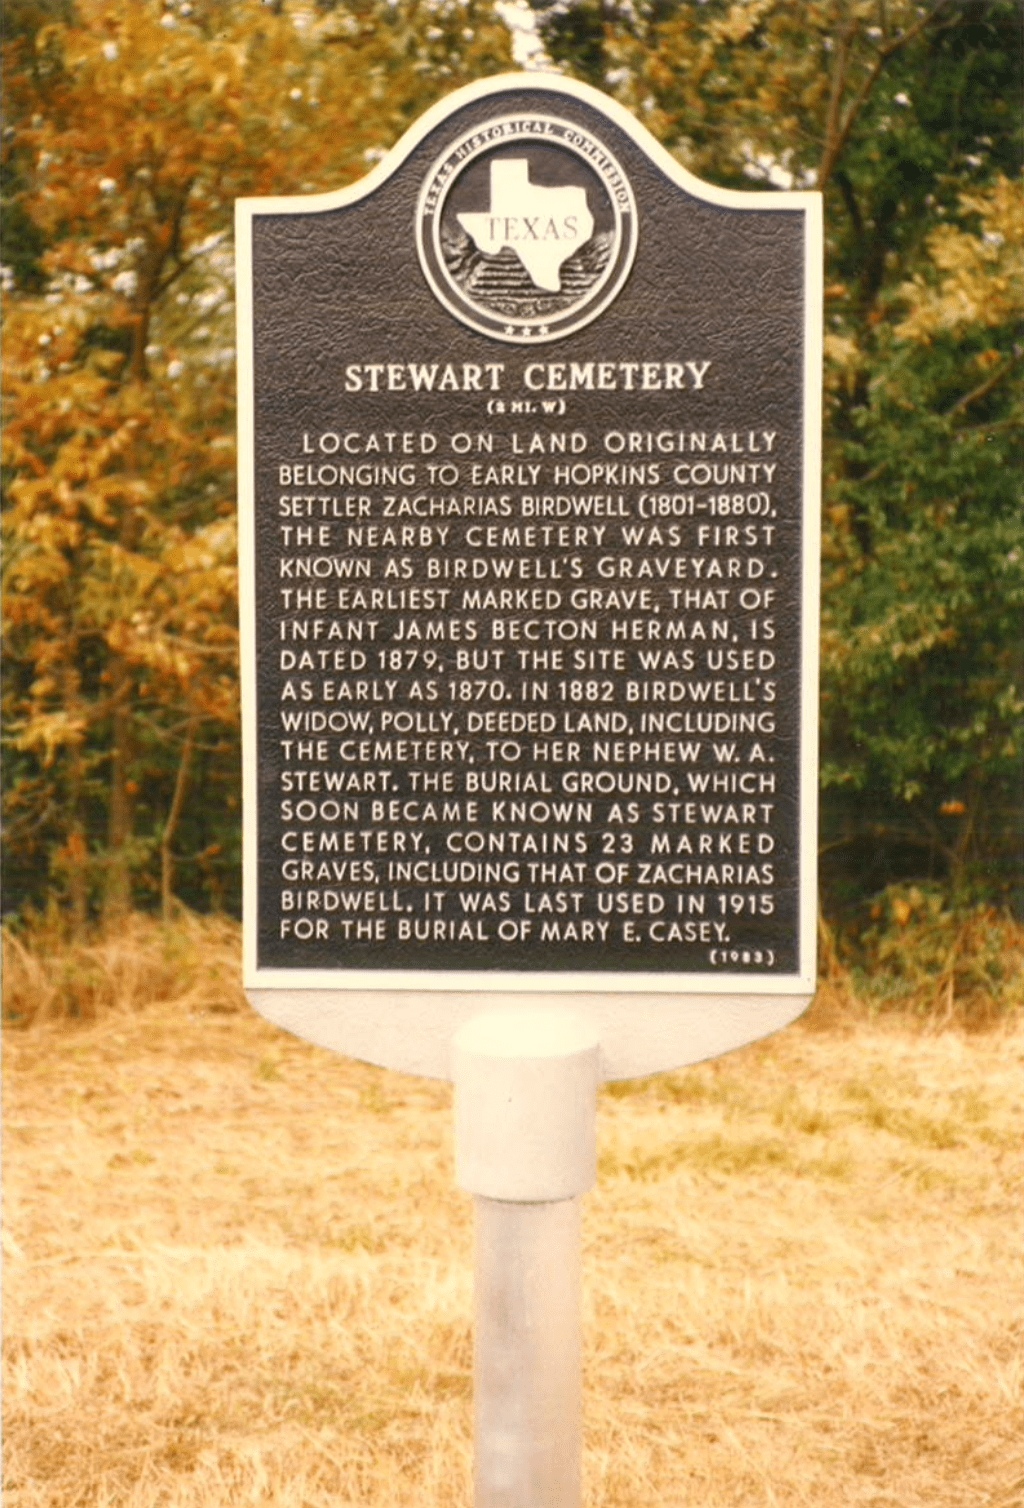 History of the Stewart-Birdwell Cemetery